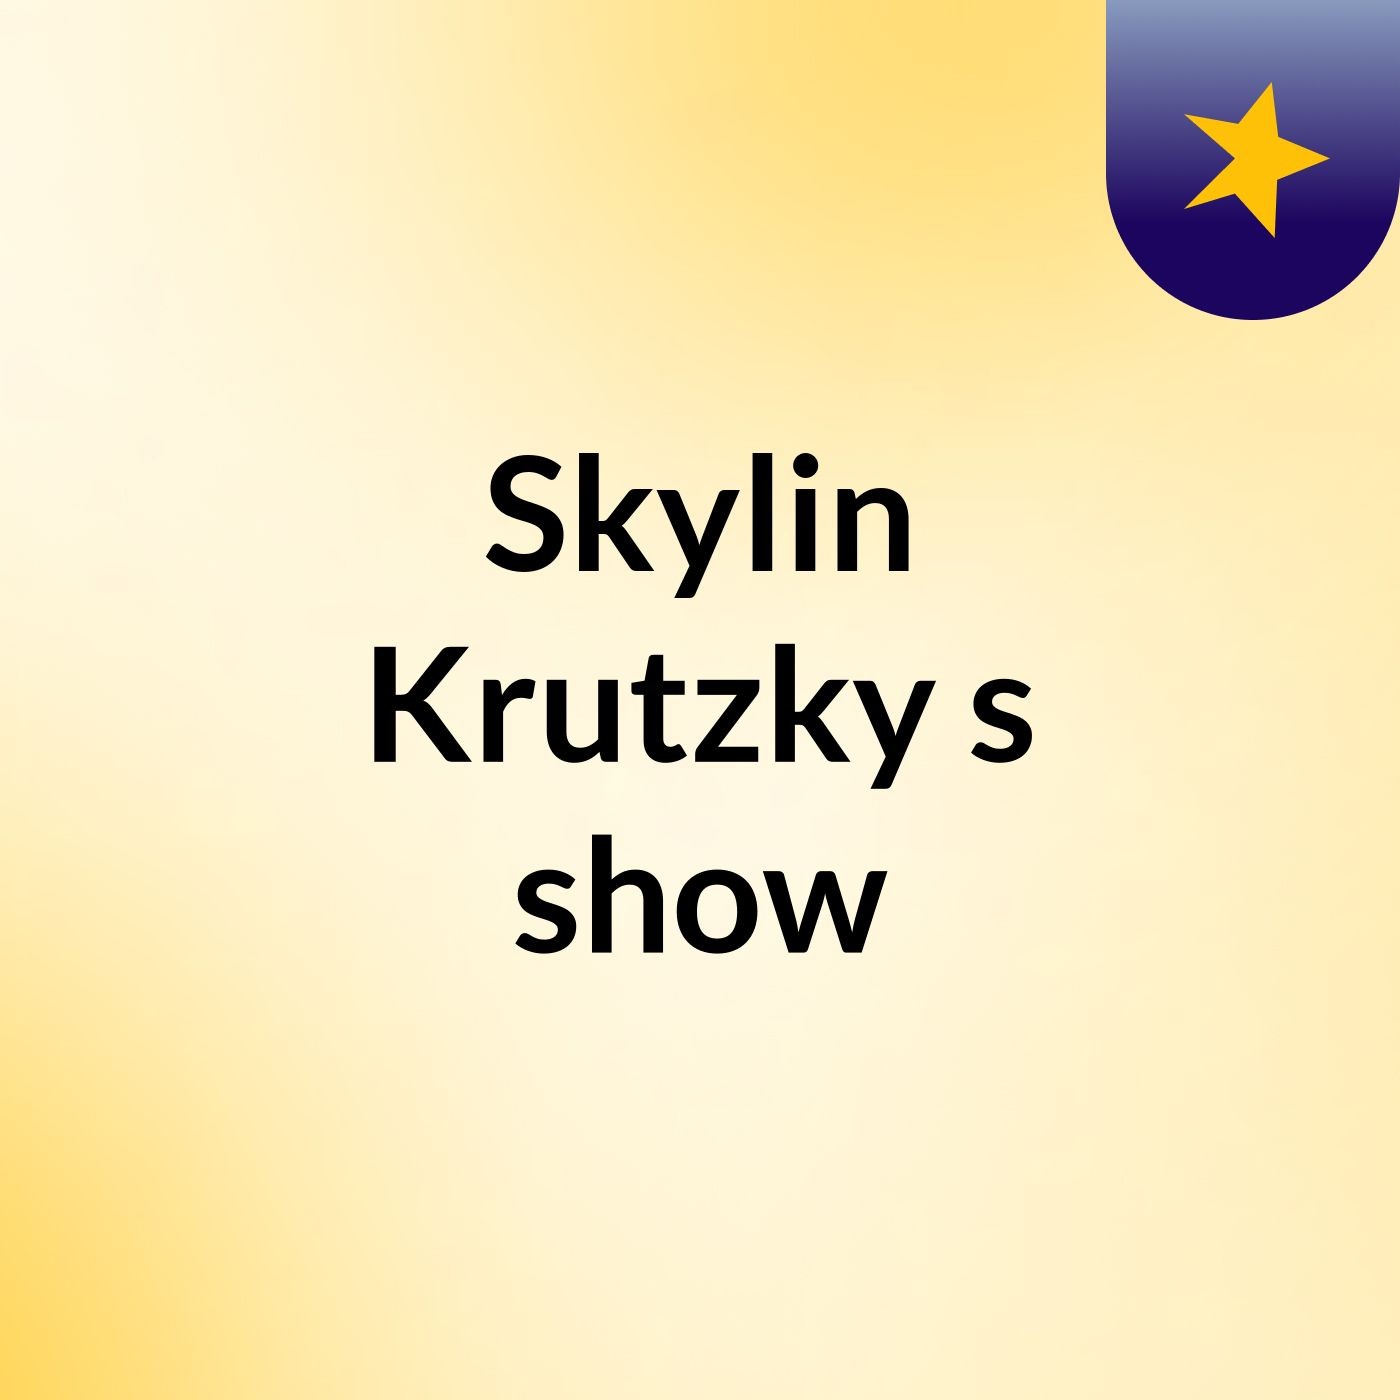 Skylin Krutzky's show